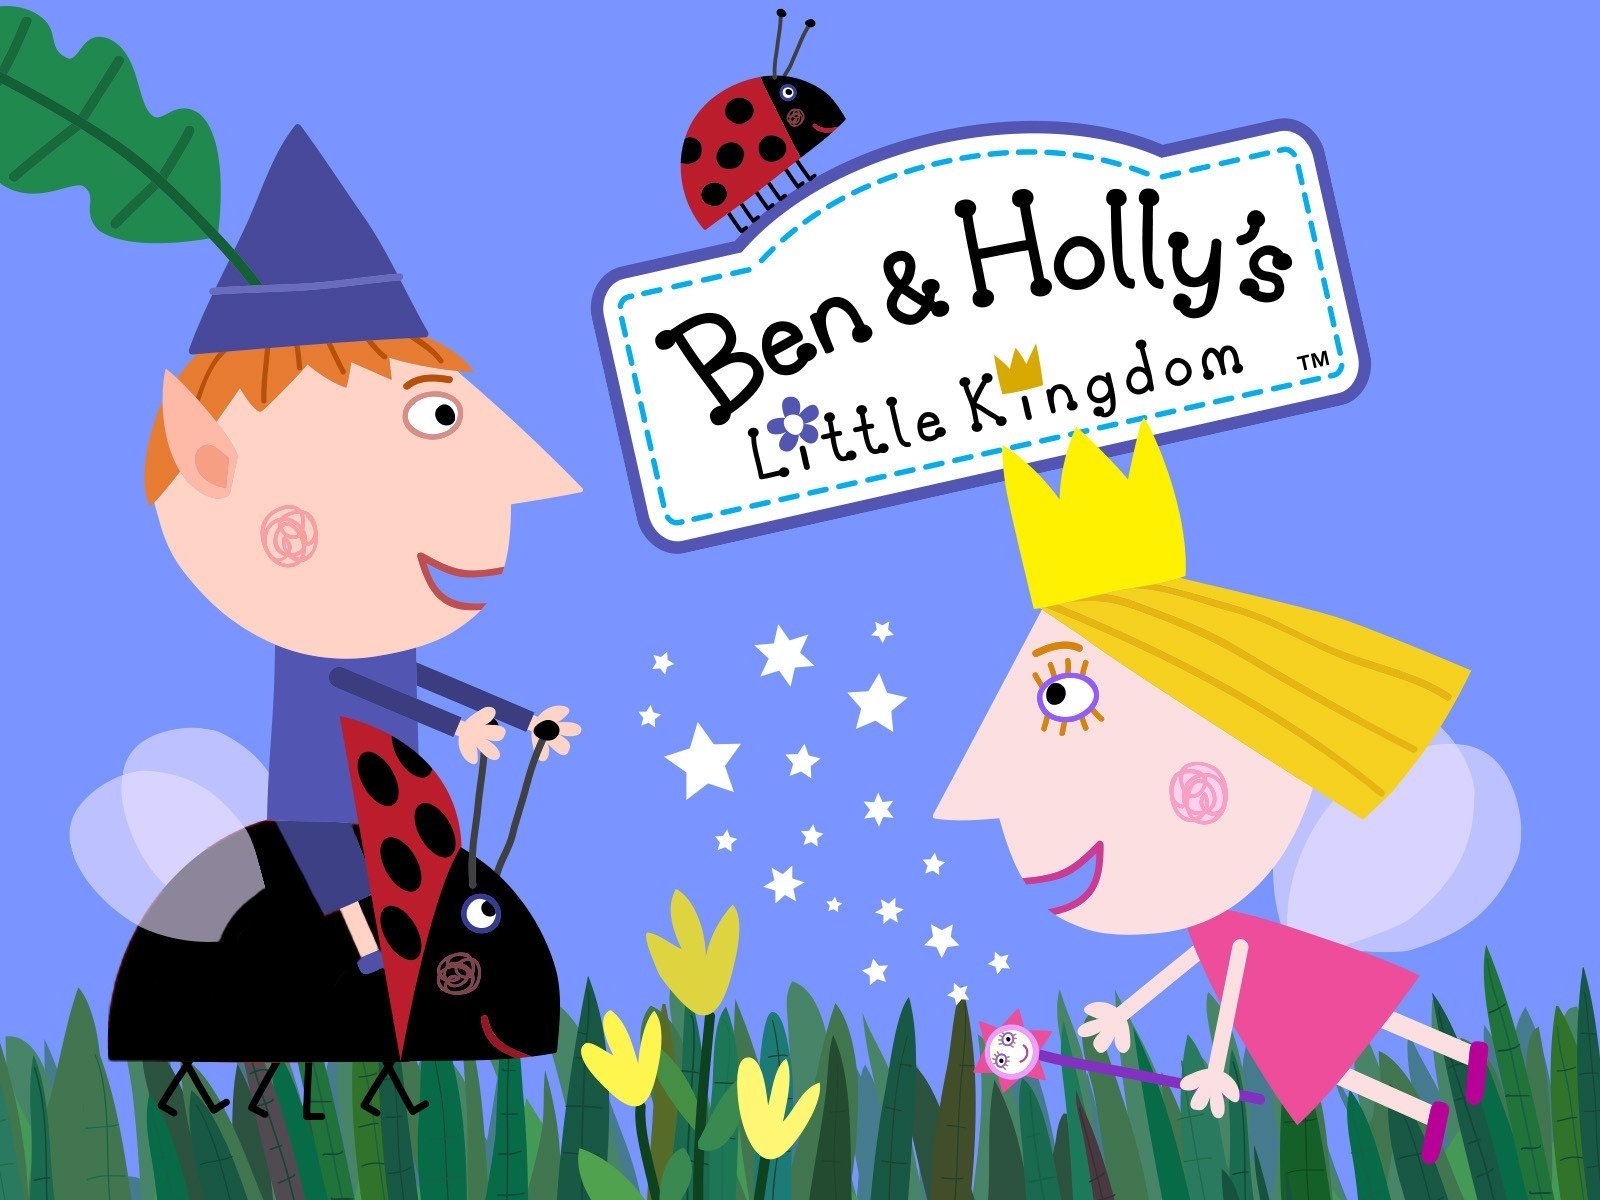 Ben and holly s kingdom. Маленькое королевст Бена и Хо. Маленькая королевство Бена и Холли. Холли маленькое королевство.